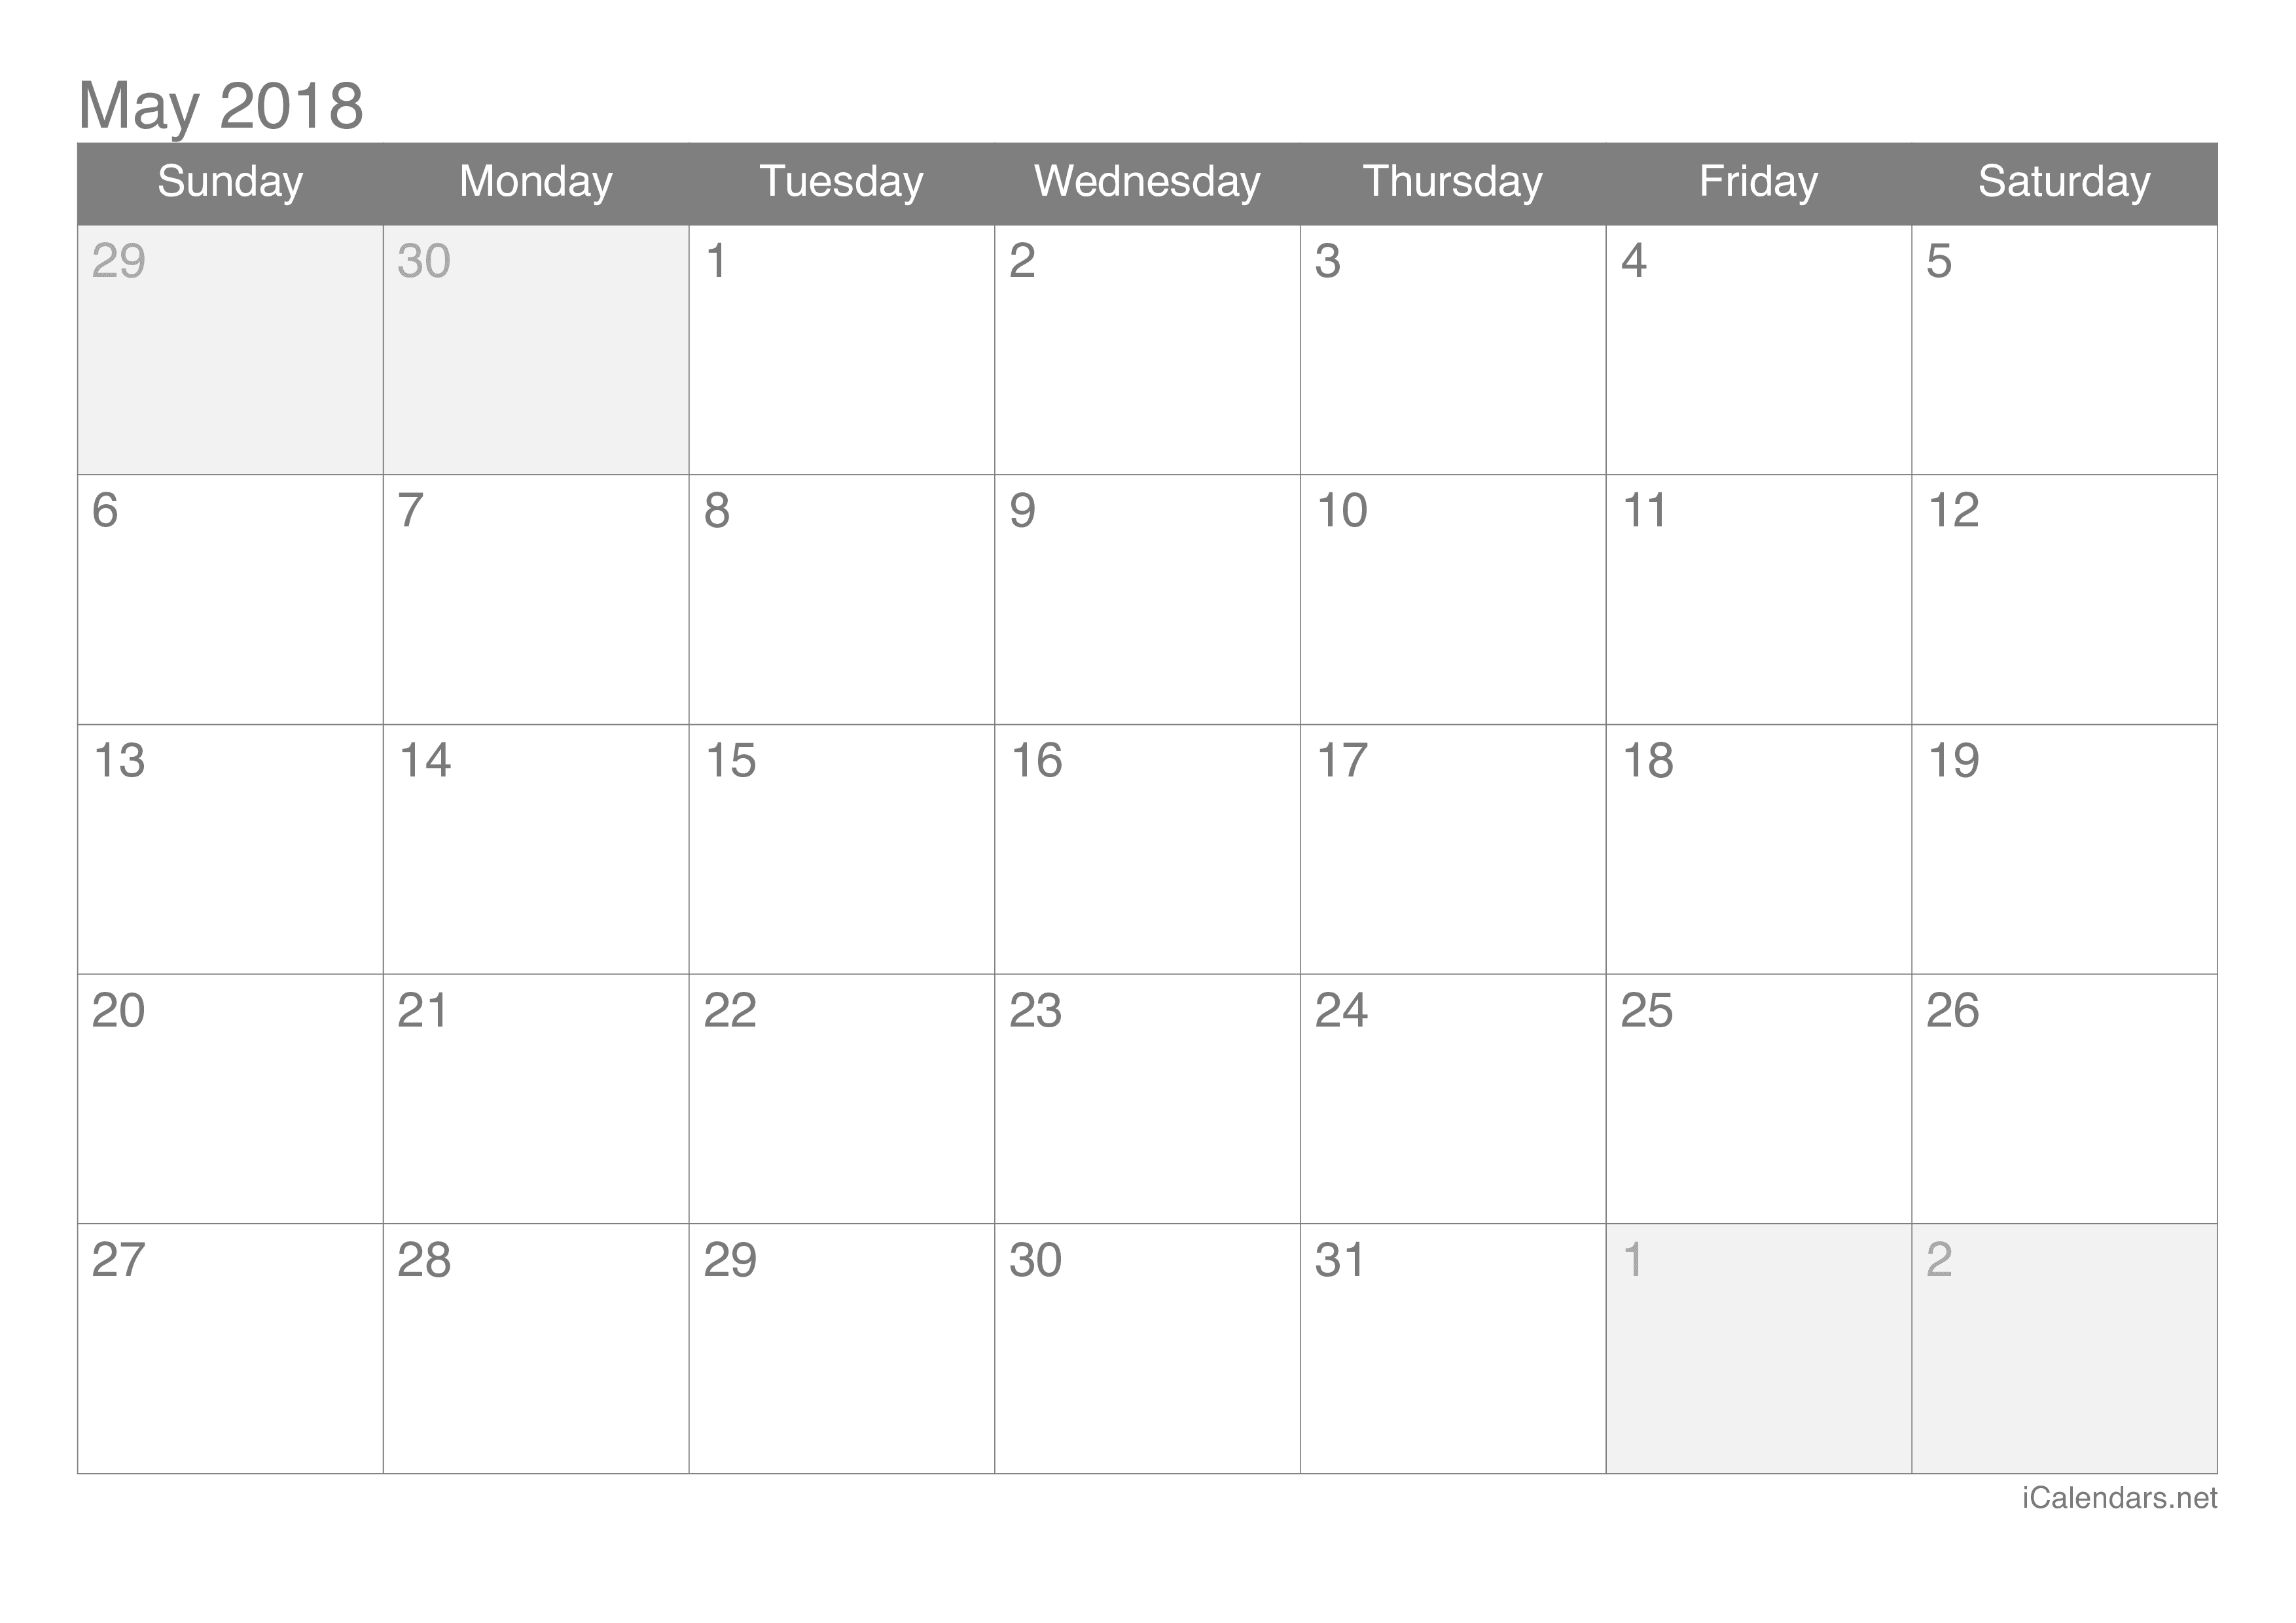 may-2018-printable-calendar-icalendars